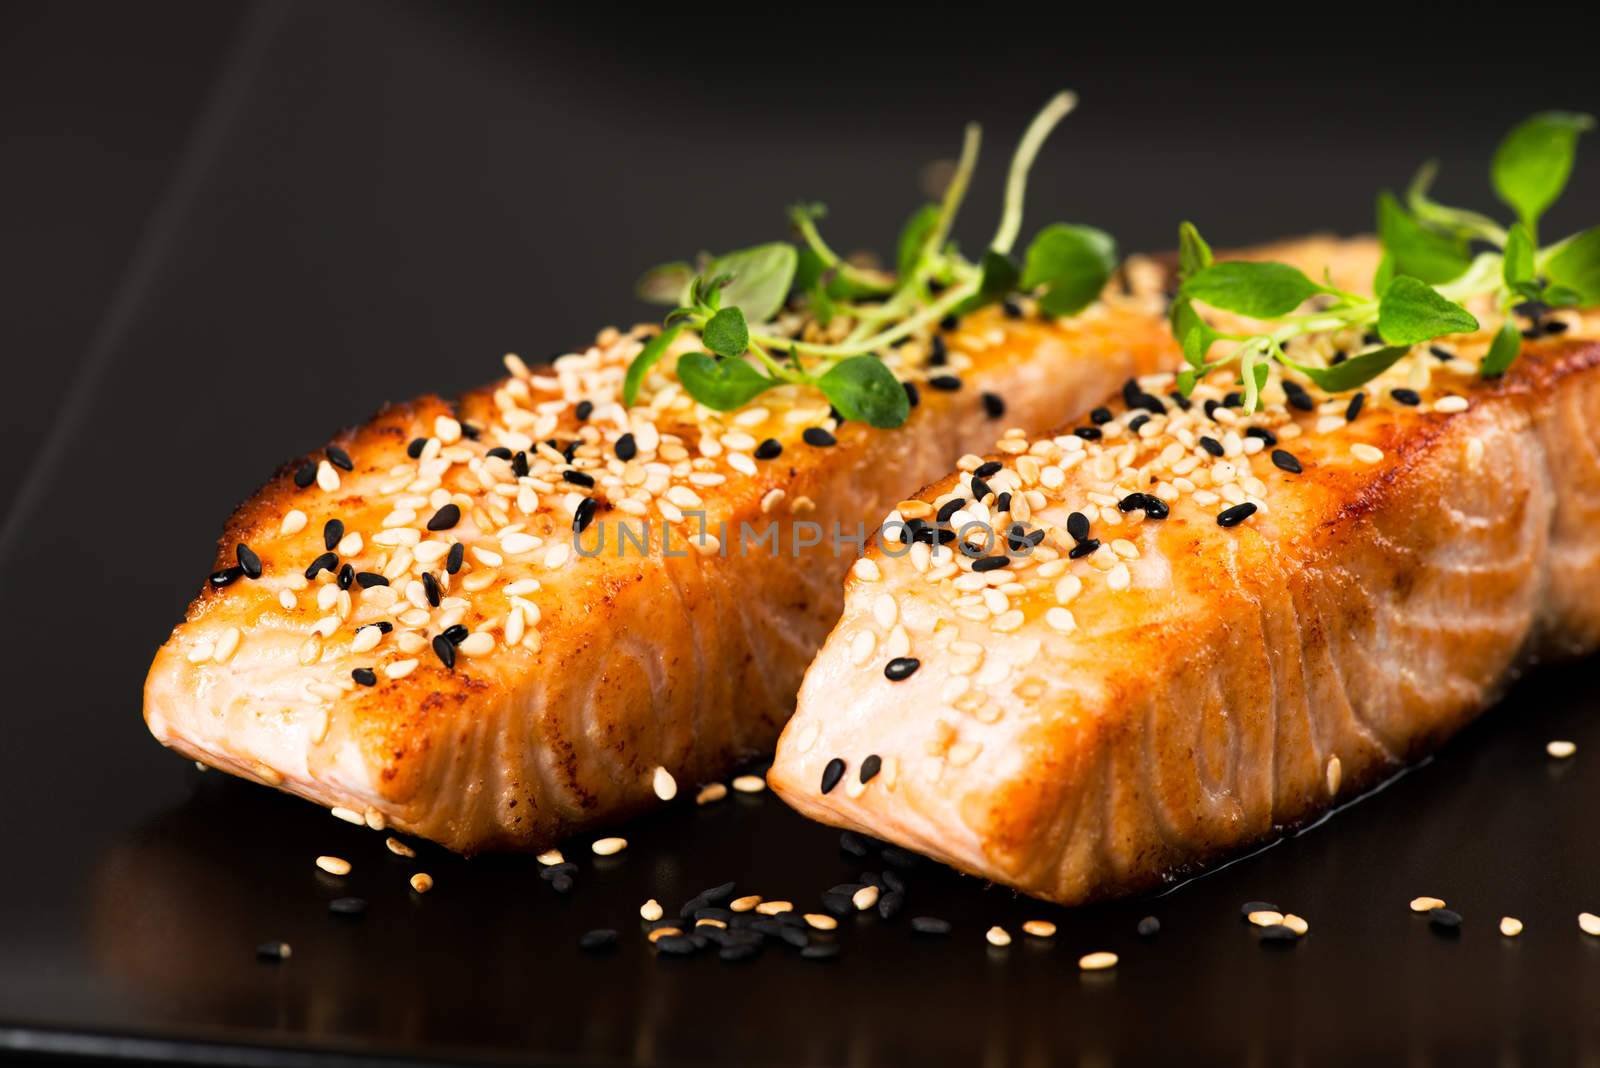 Fried salmon with sesame seeds and herbs by Nanisimova